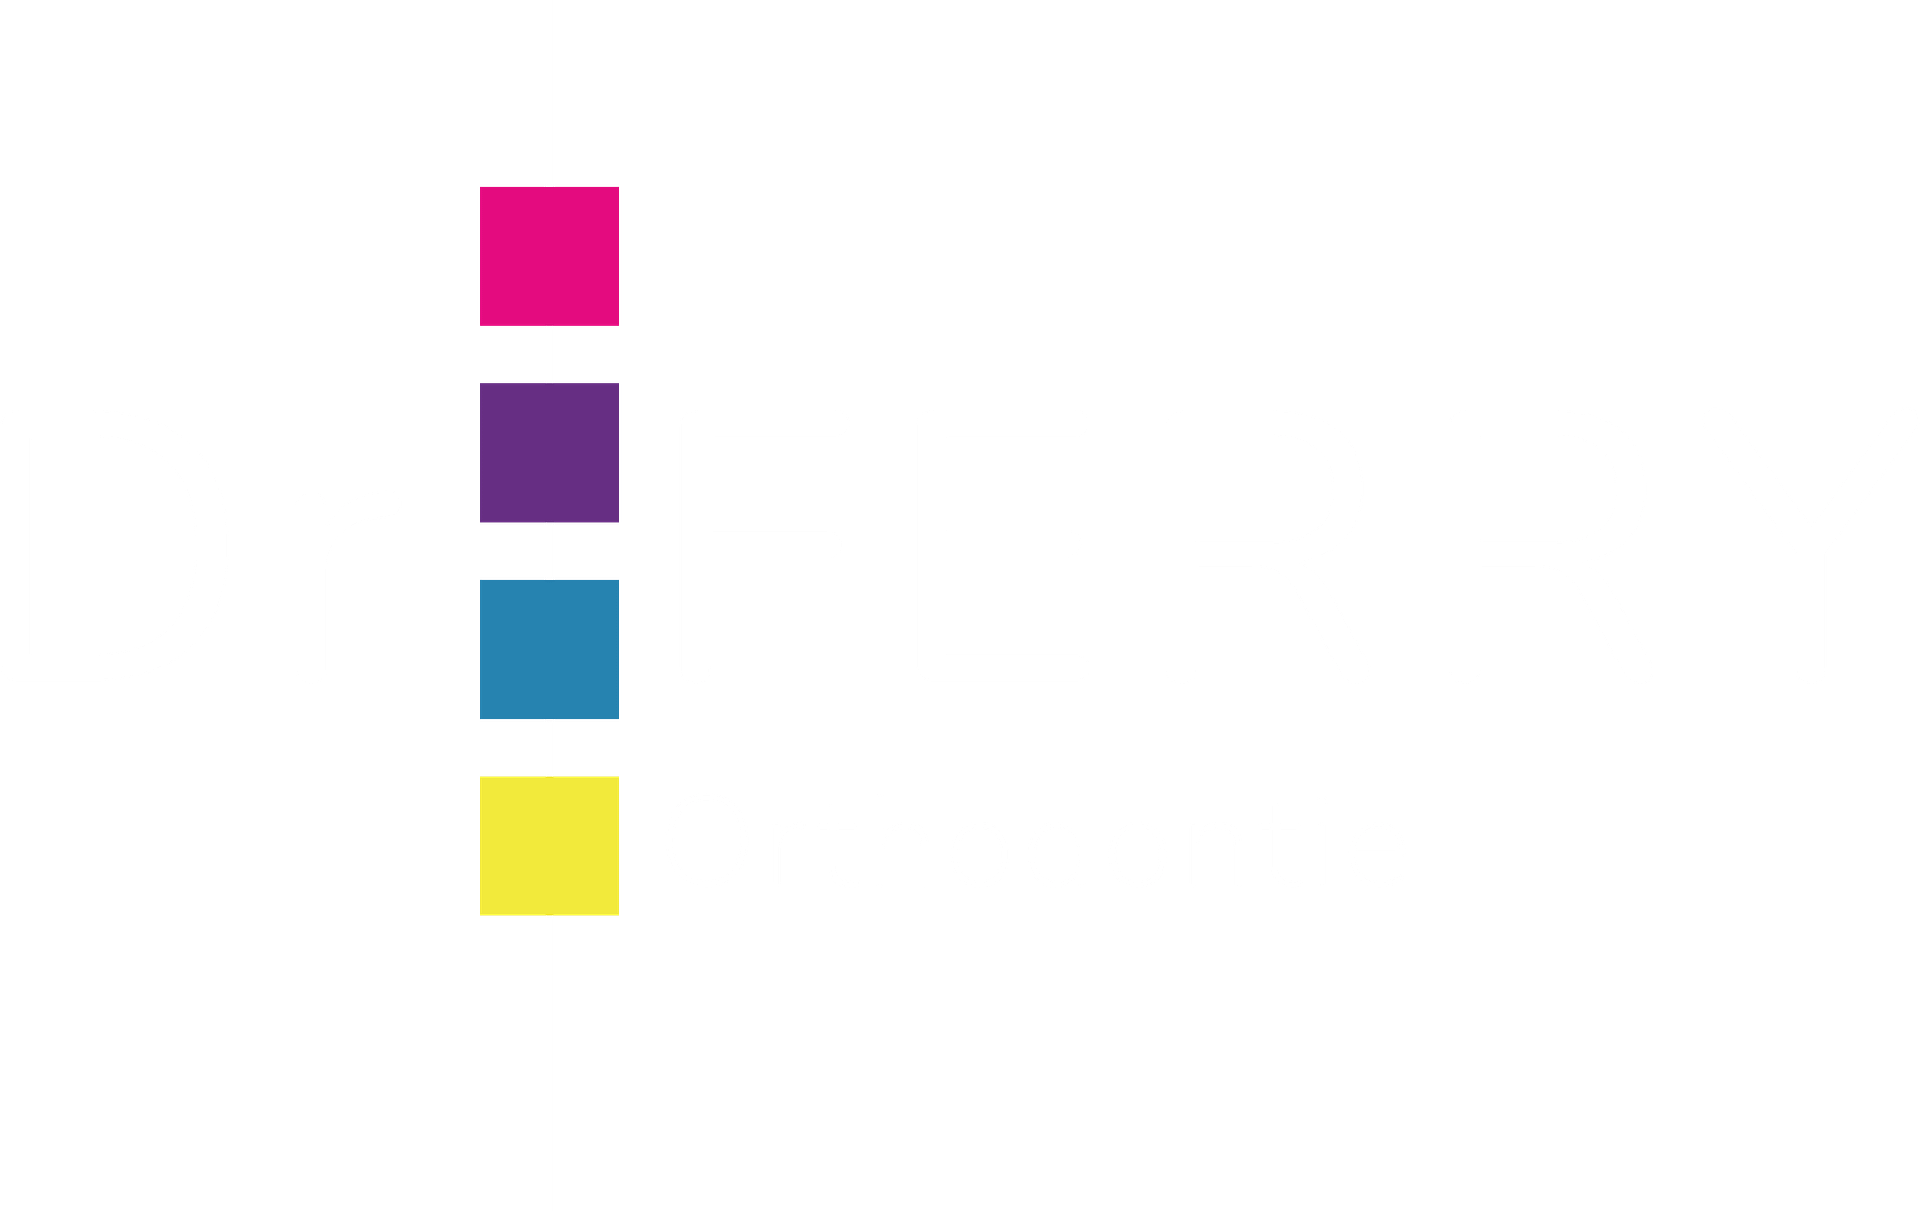 Cabinet d'orthodontie du Dr Ferry - Tarare